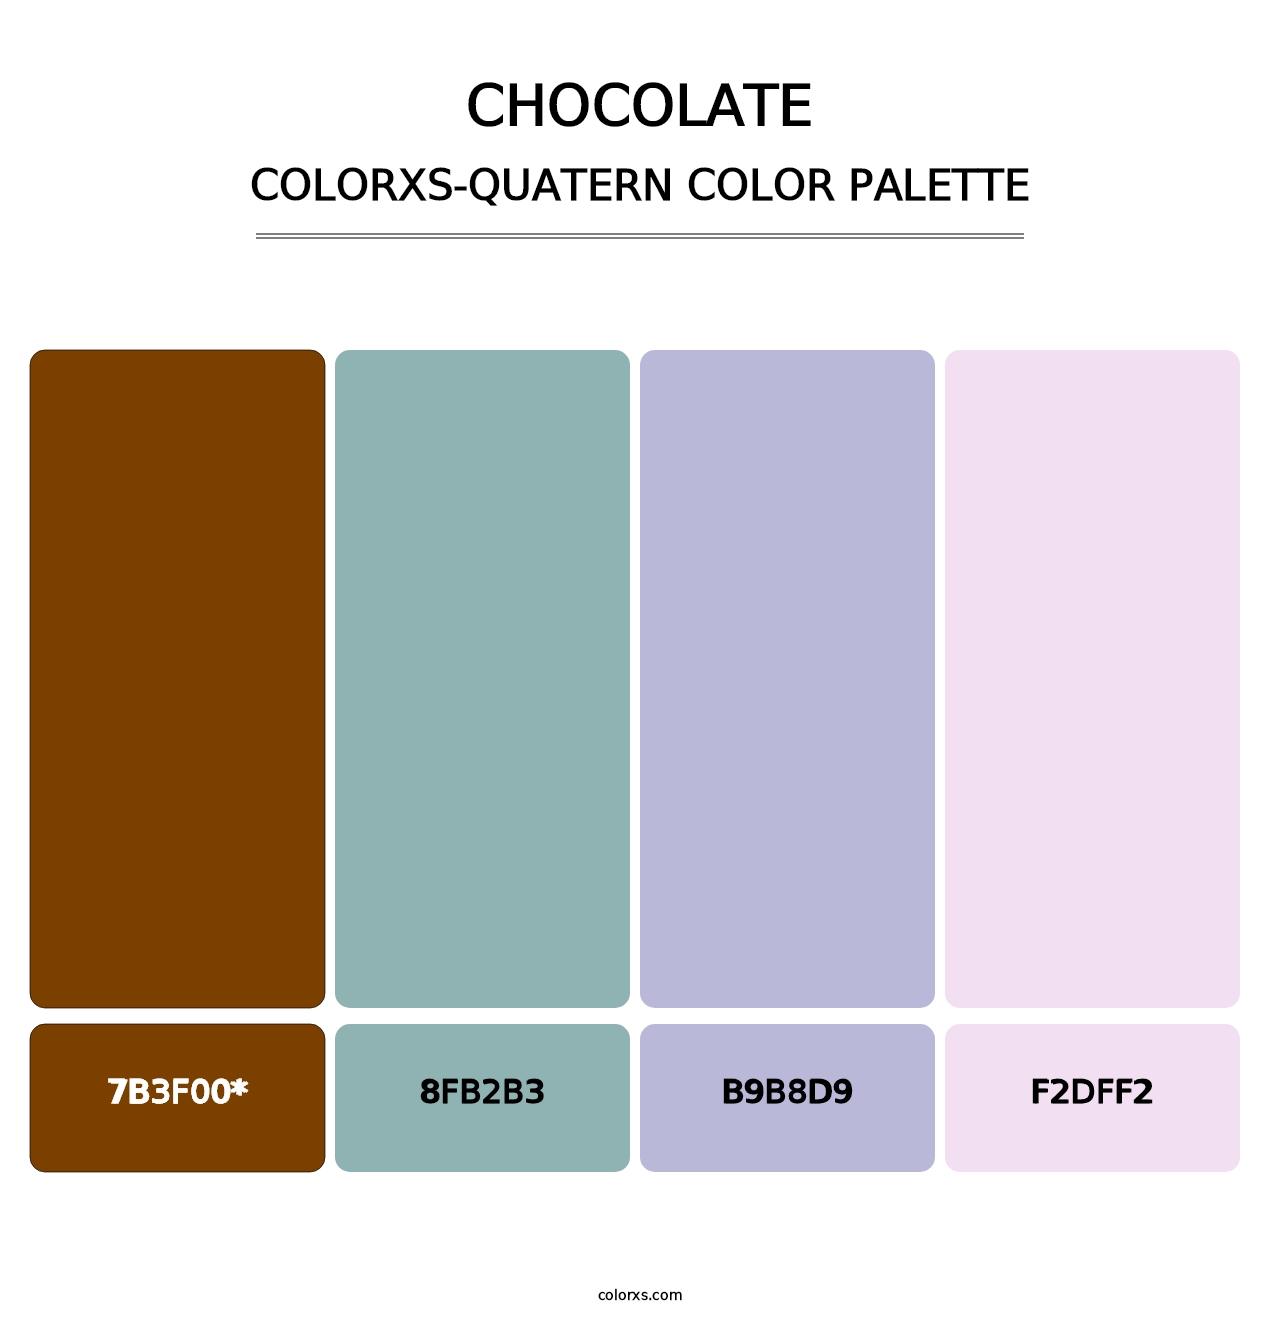 Chocolate - Colorxs Quatern Palette